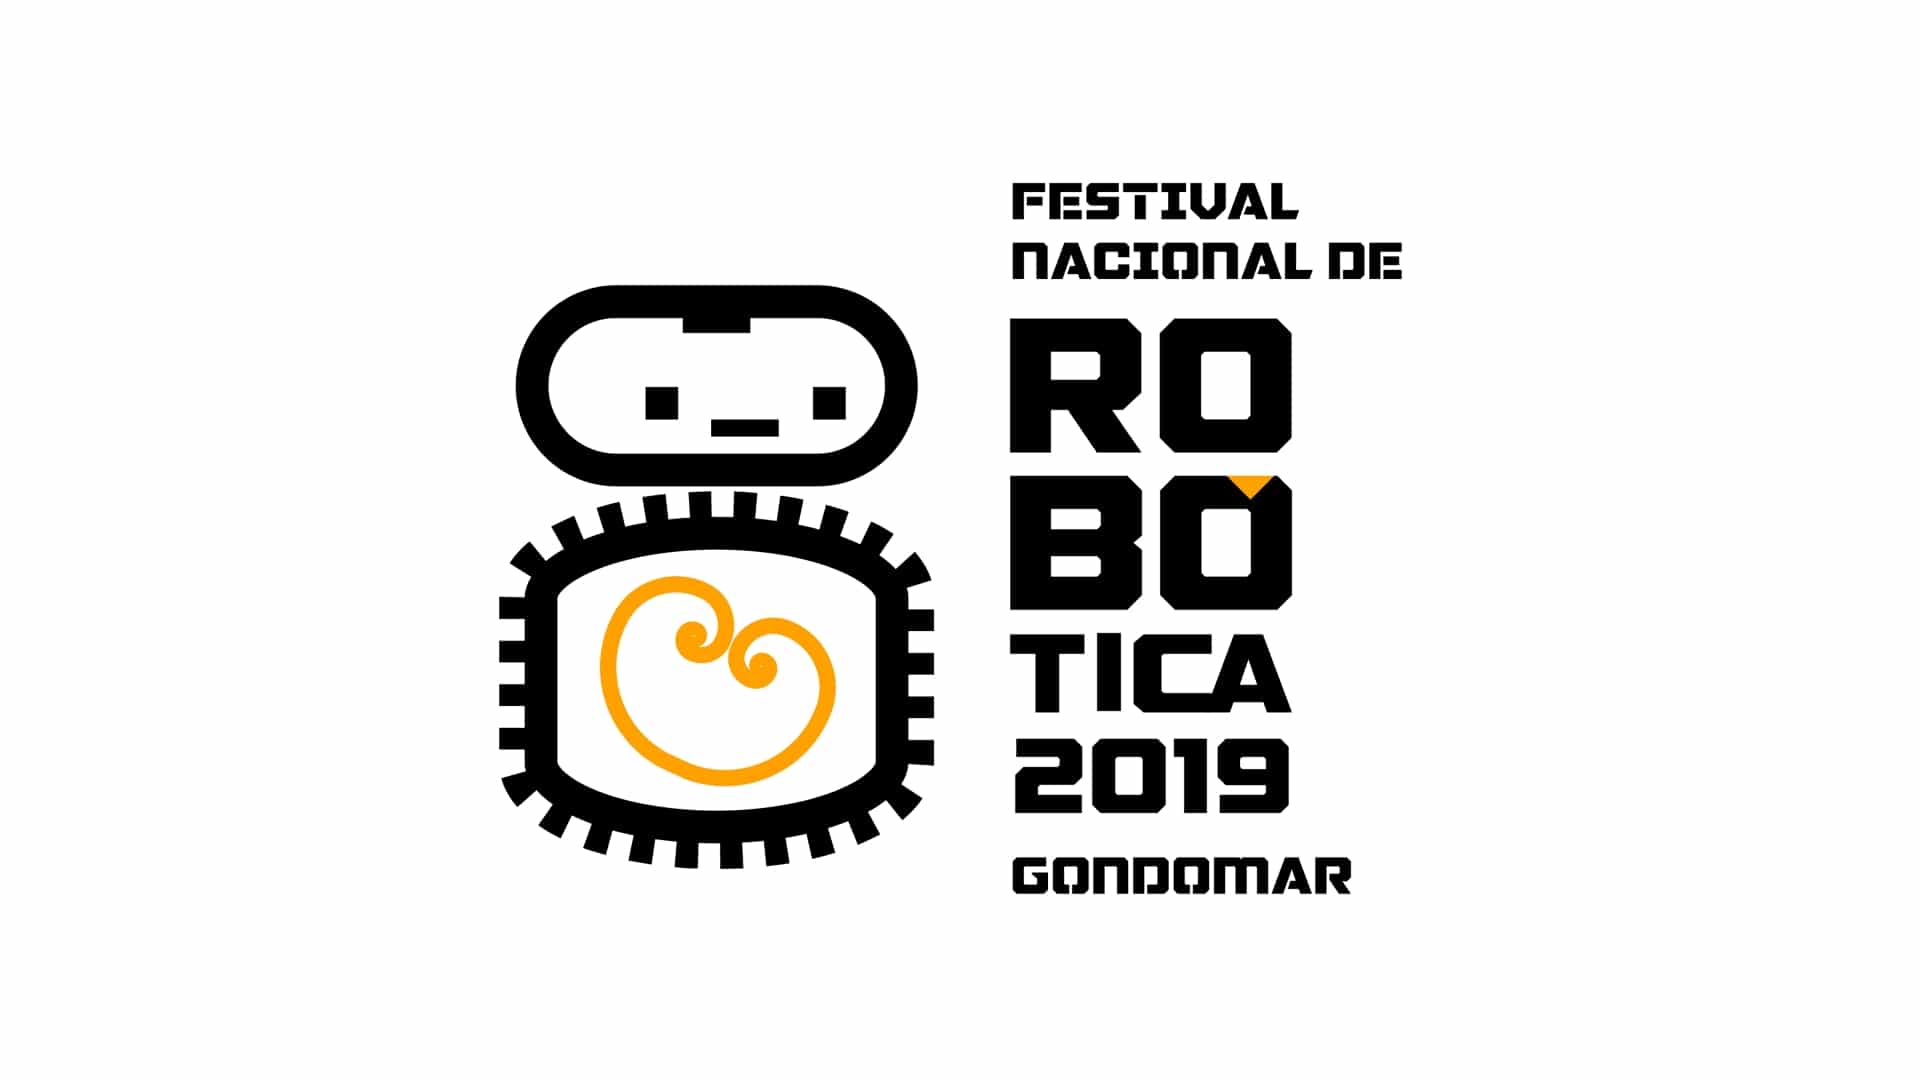 Festival Nacional de Robótica